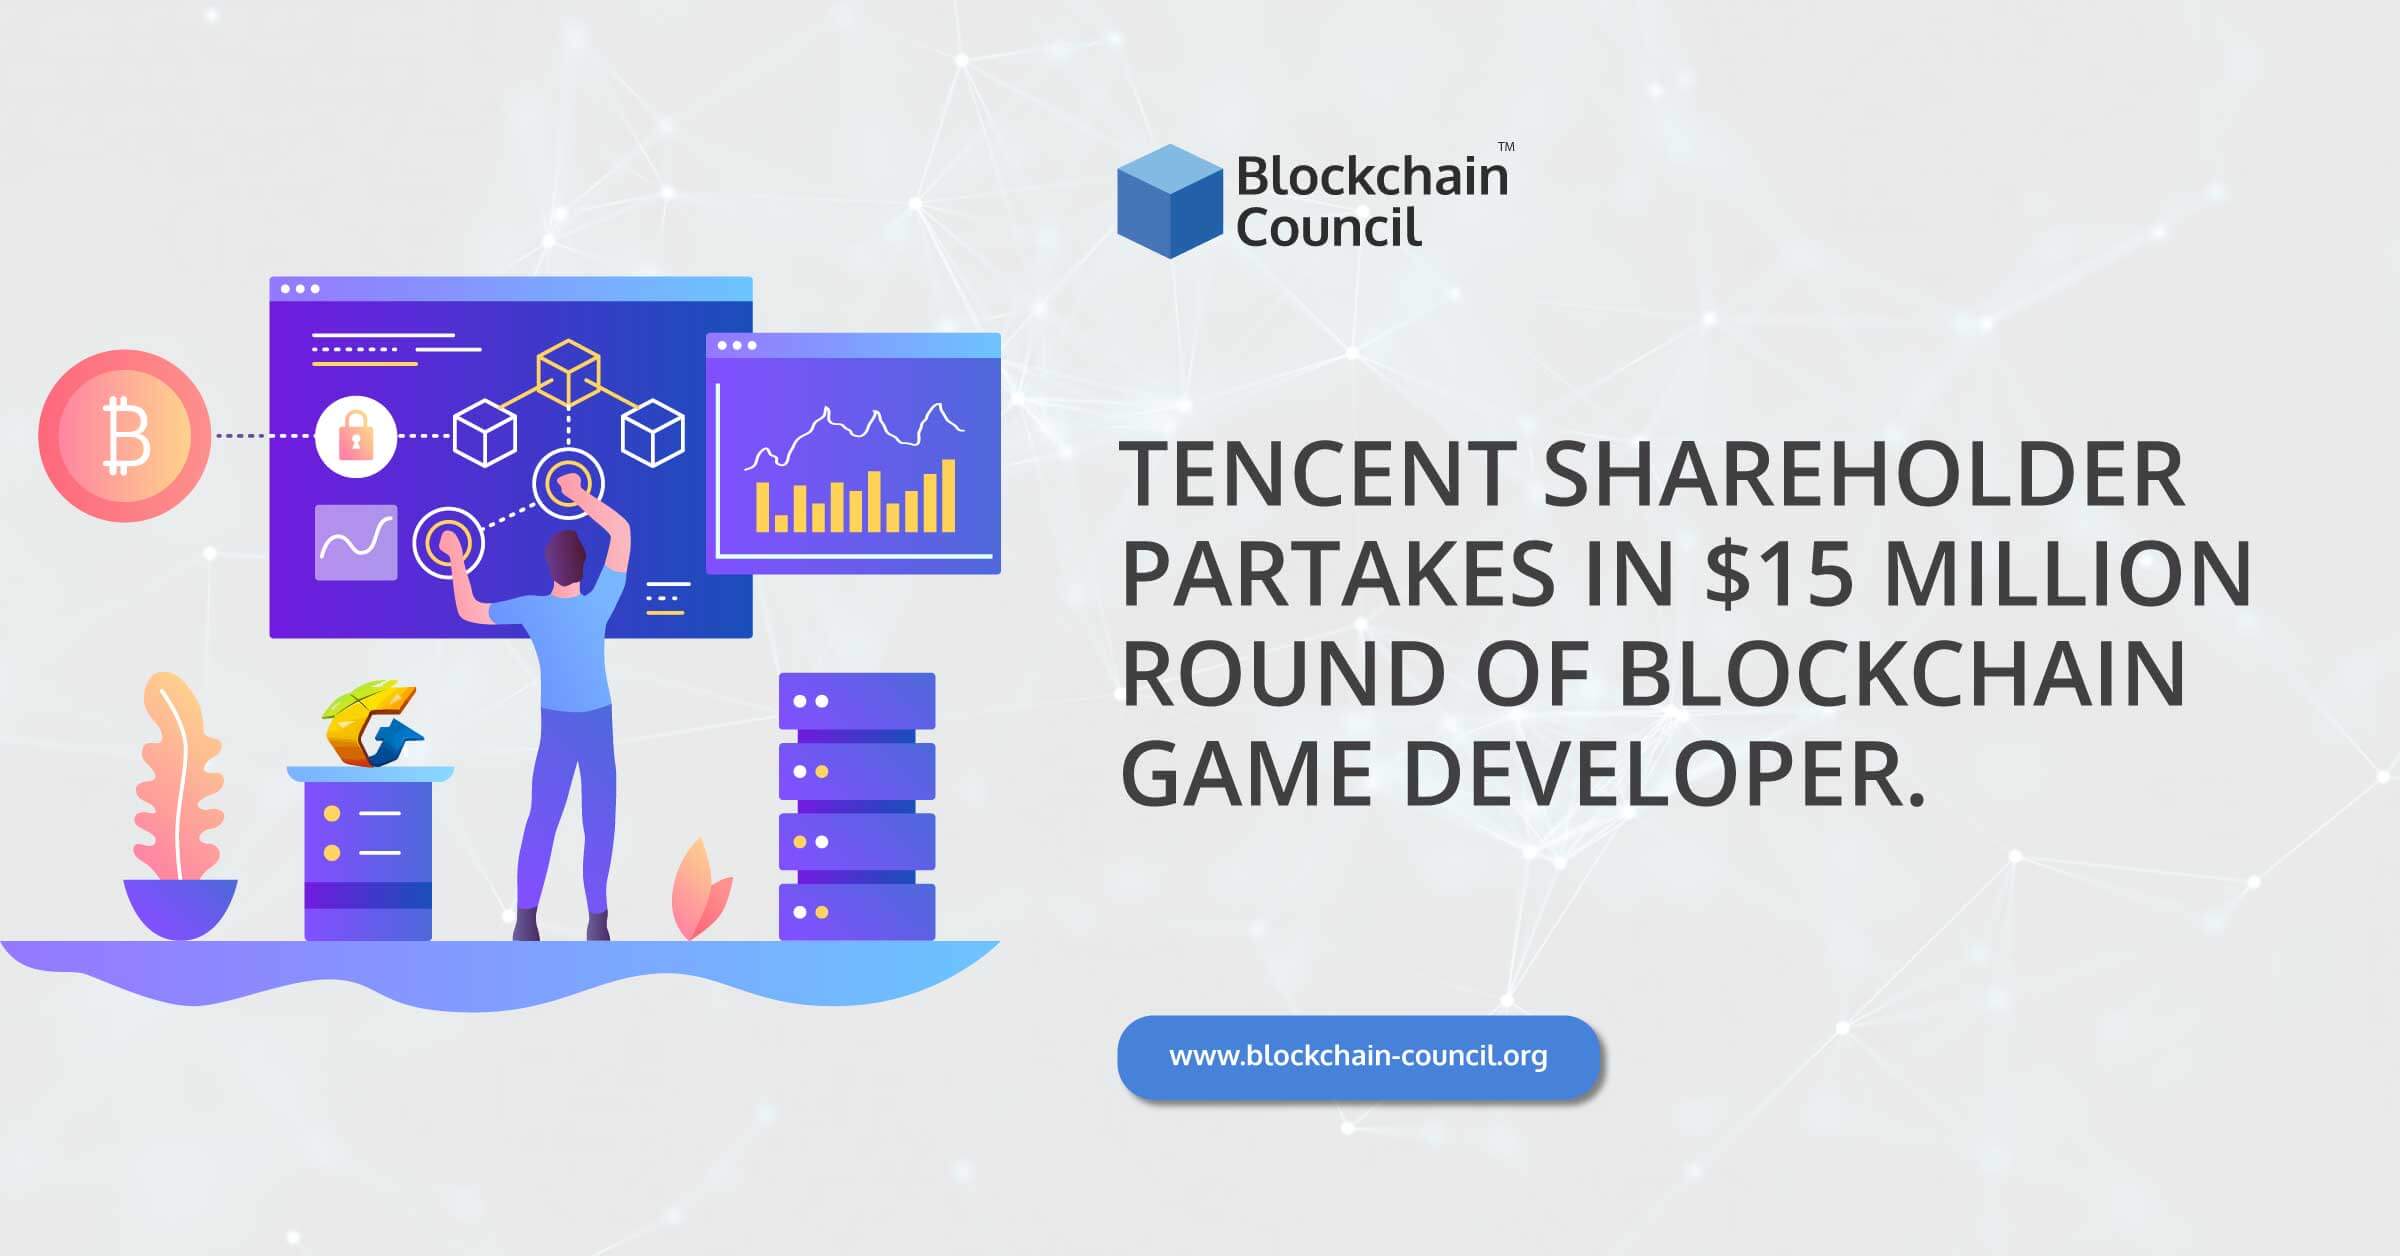 Tencent-Shareholder-Partakes-in-$15-Million-Round-of-Blockchain-Game-Developer